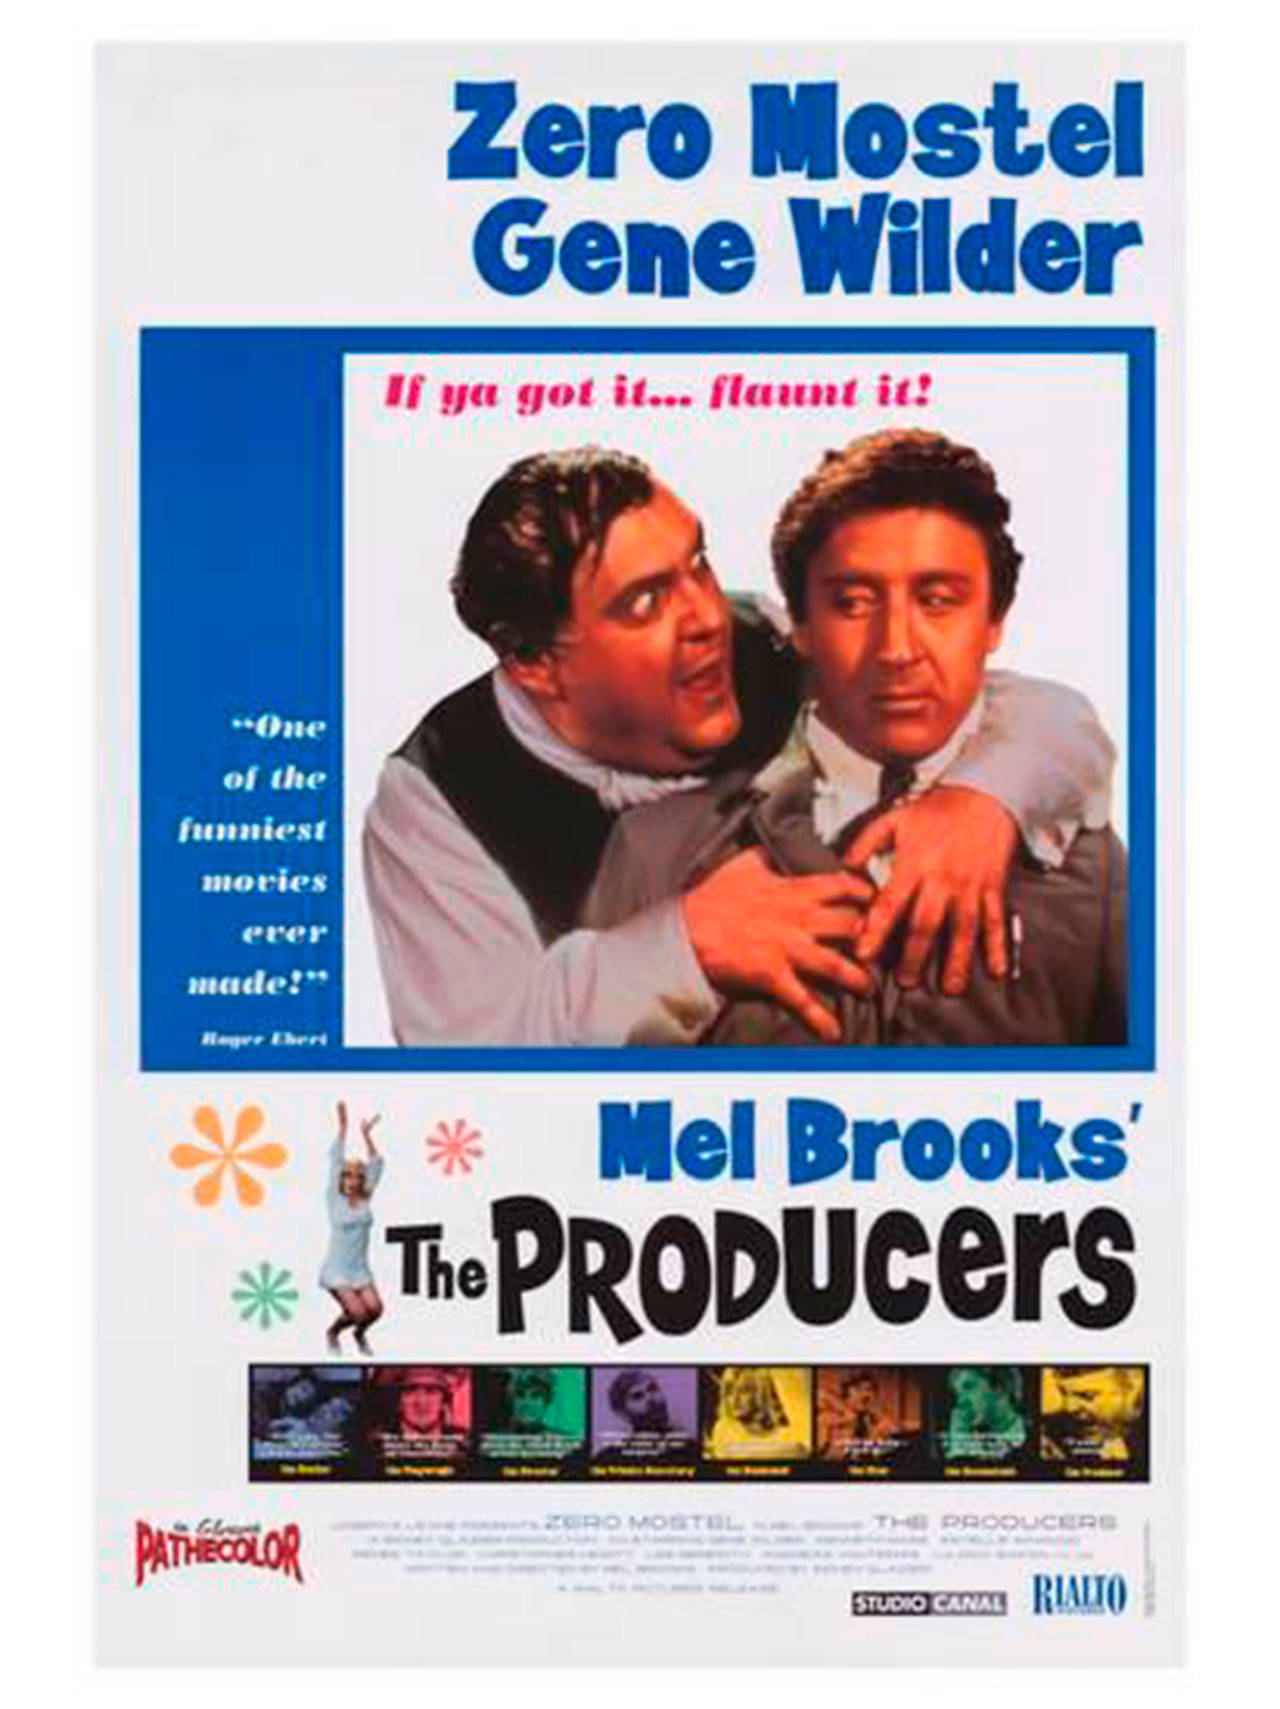 Image courtesy of Bainbridge Cinemas | Mel Brooks’ iconic comedy classic “The Producers” (1967) will be back on the big screen at Bainbridge Cinemas at 7 p.m. Sunday, June 3.